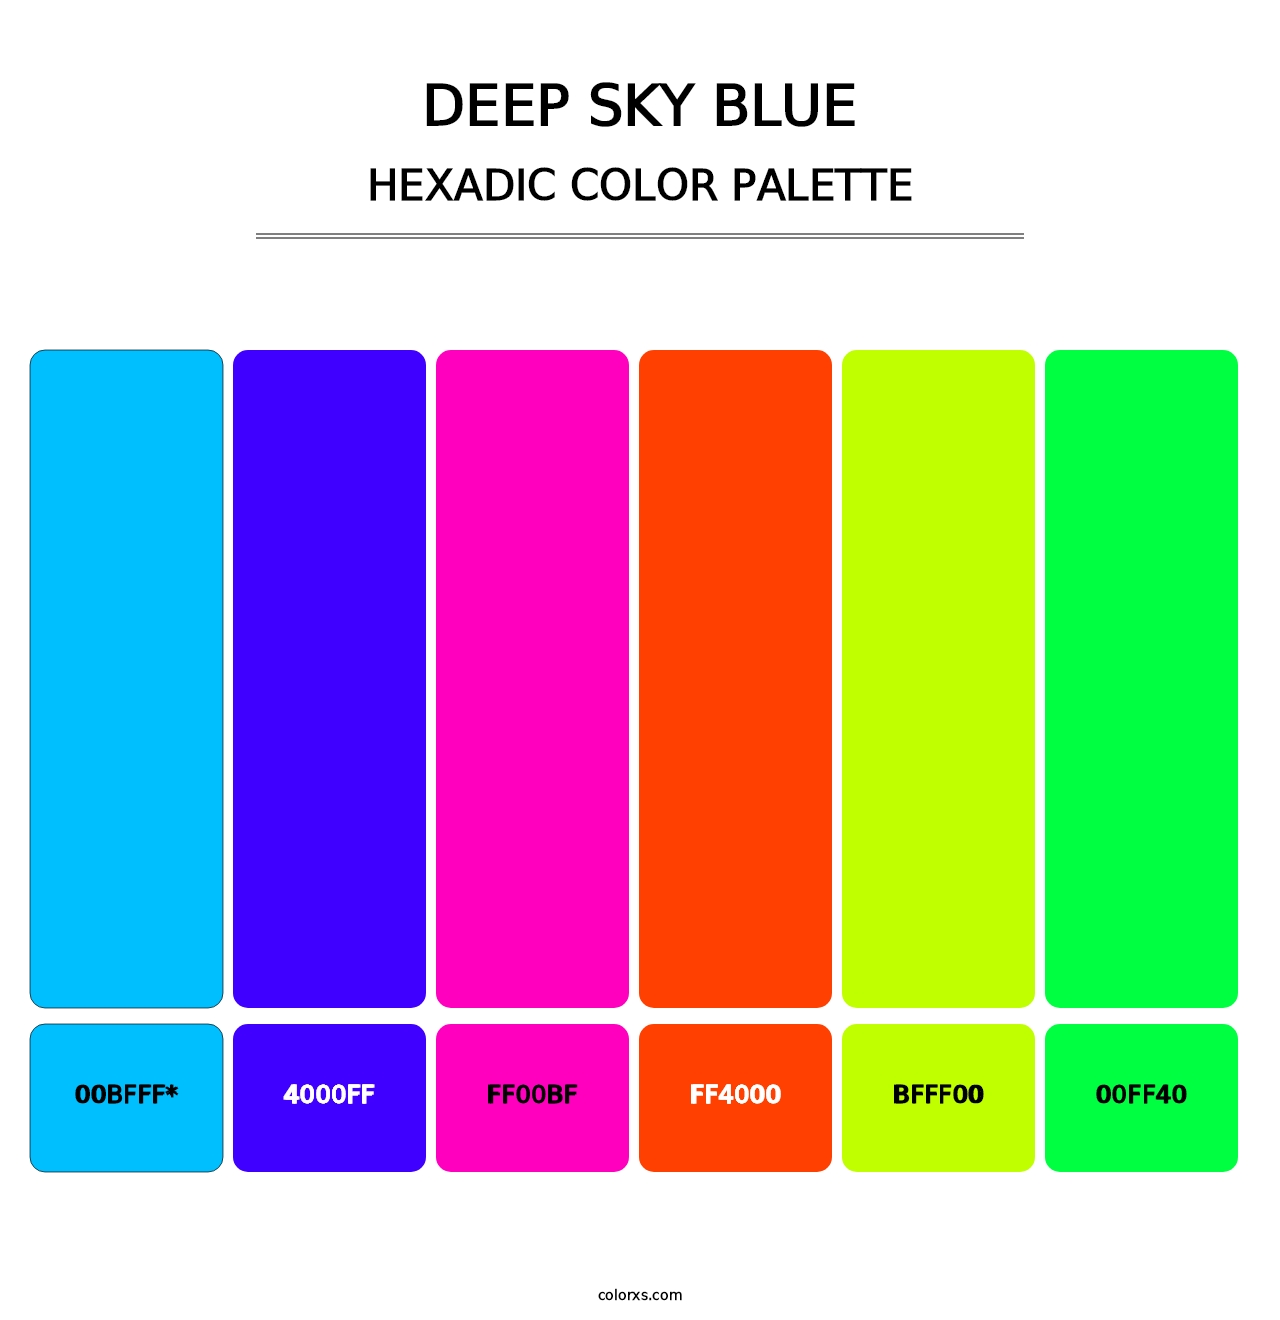 Deep Sky Blue - Hexadic Color Palette